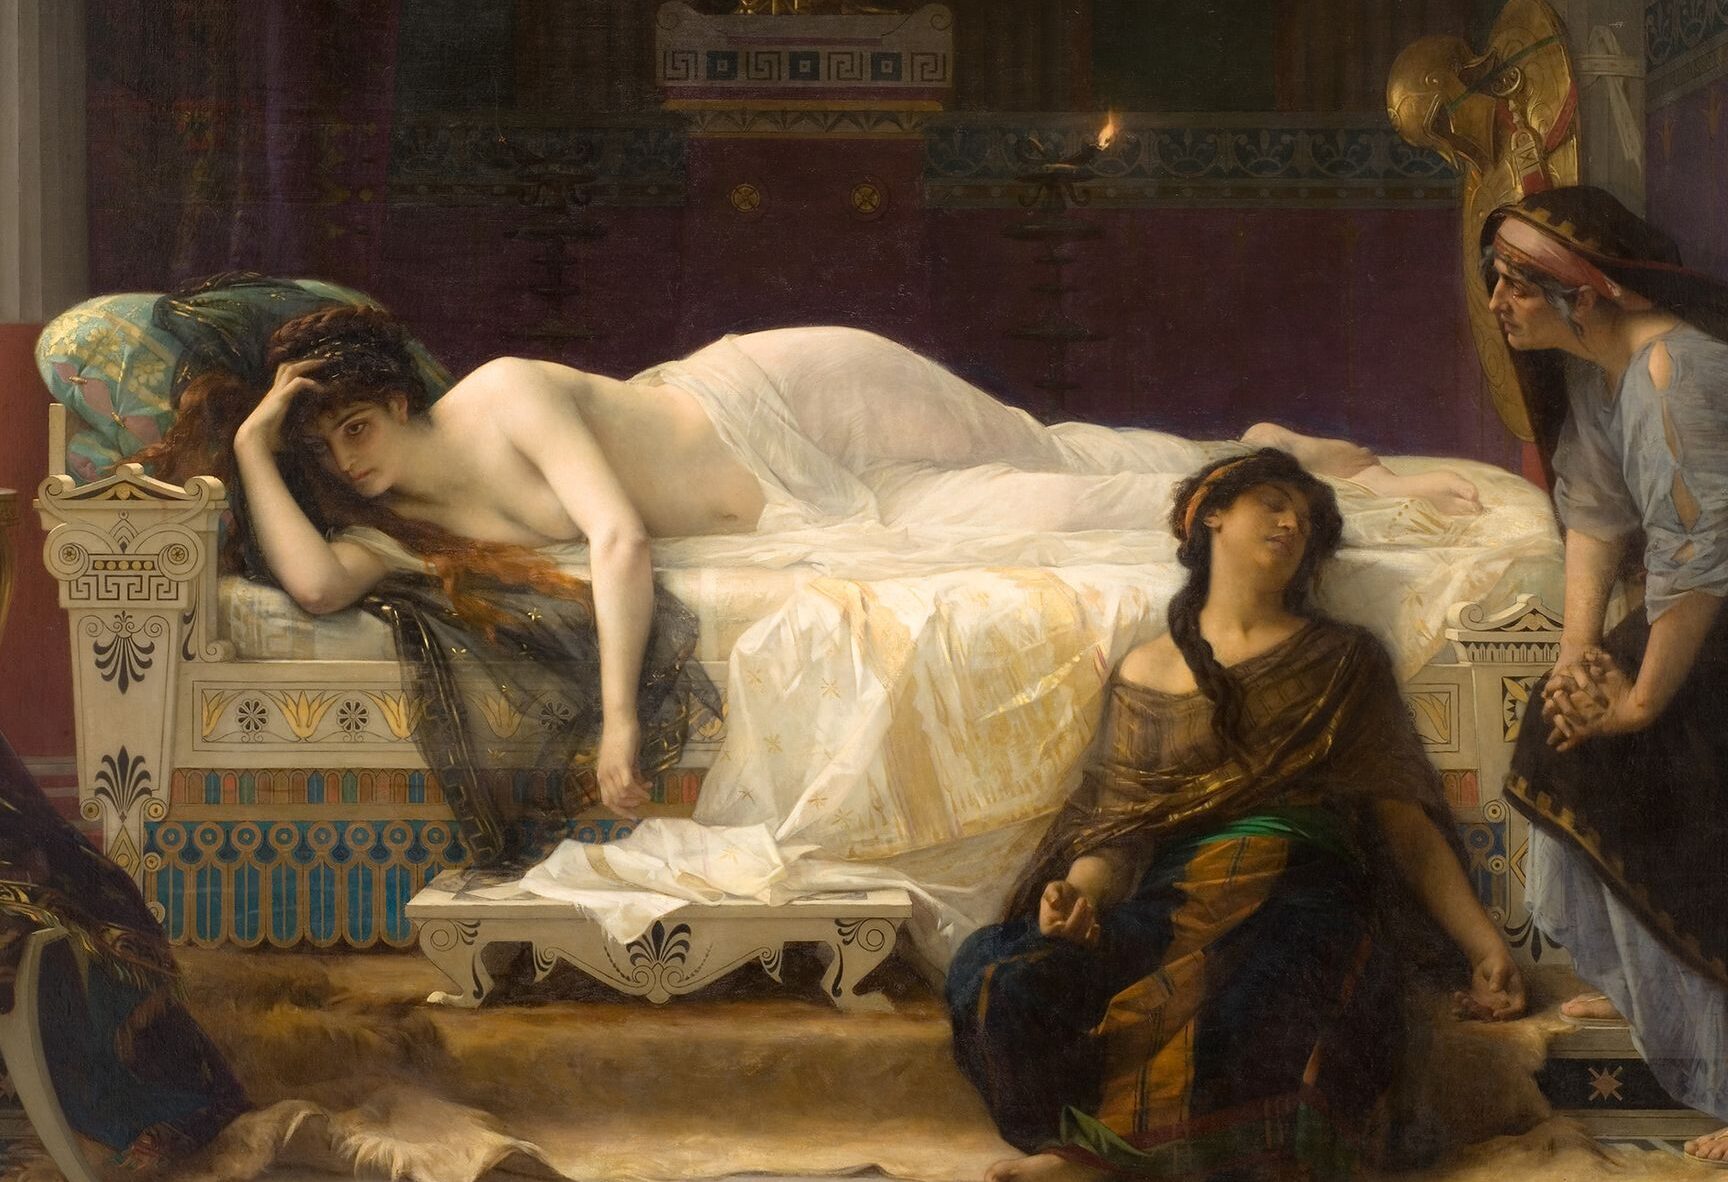 El impresionismo en la pintura francesa: una mirada al arte del siglo XIX